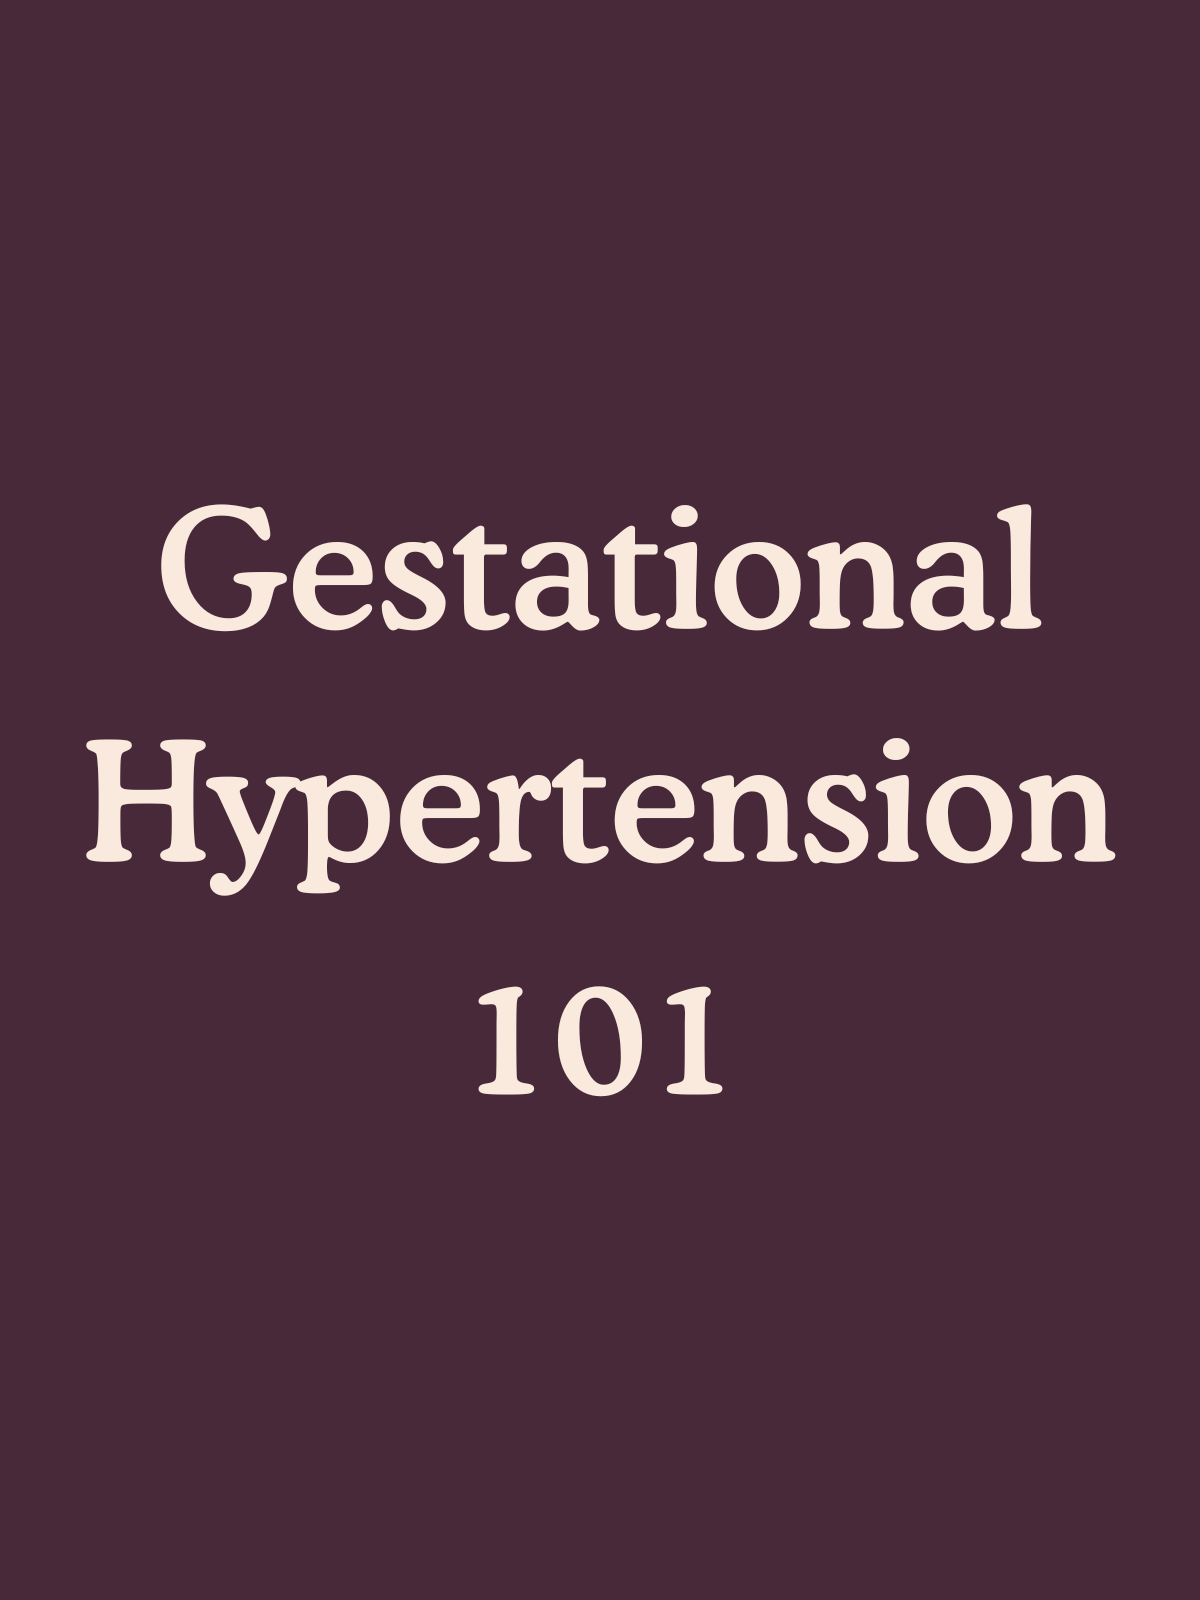 Gestational Hypertension 101